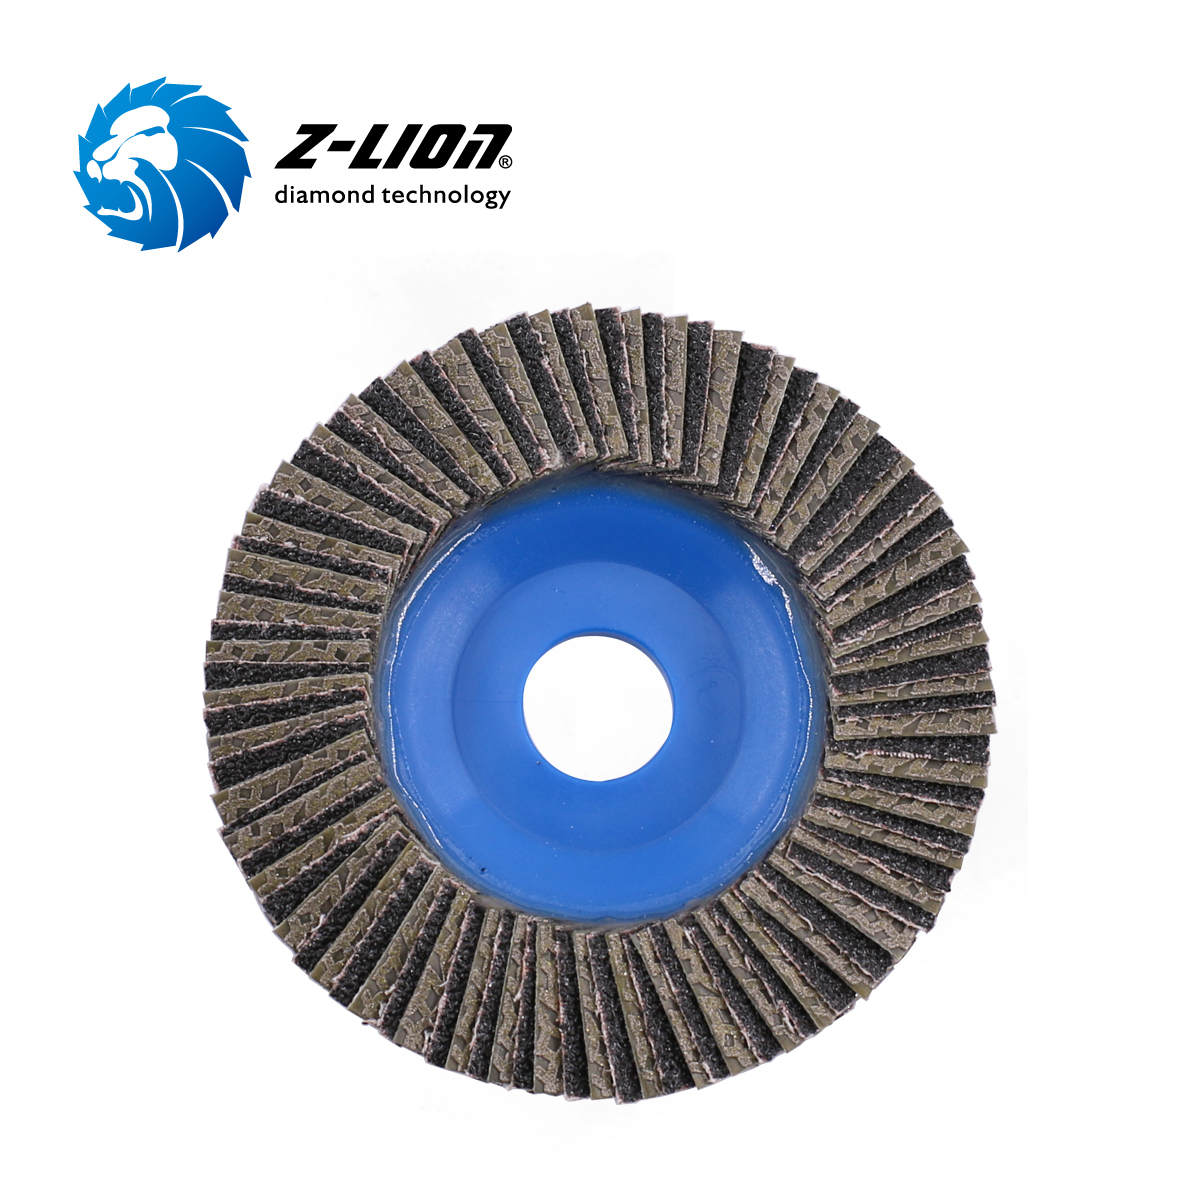 Z-LION Hybrid diamond flap discs Hybrid flap wheels Featured Image